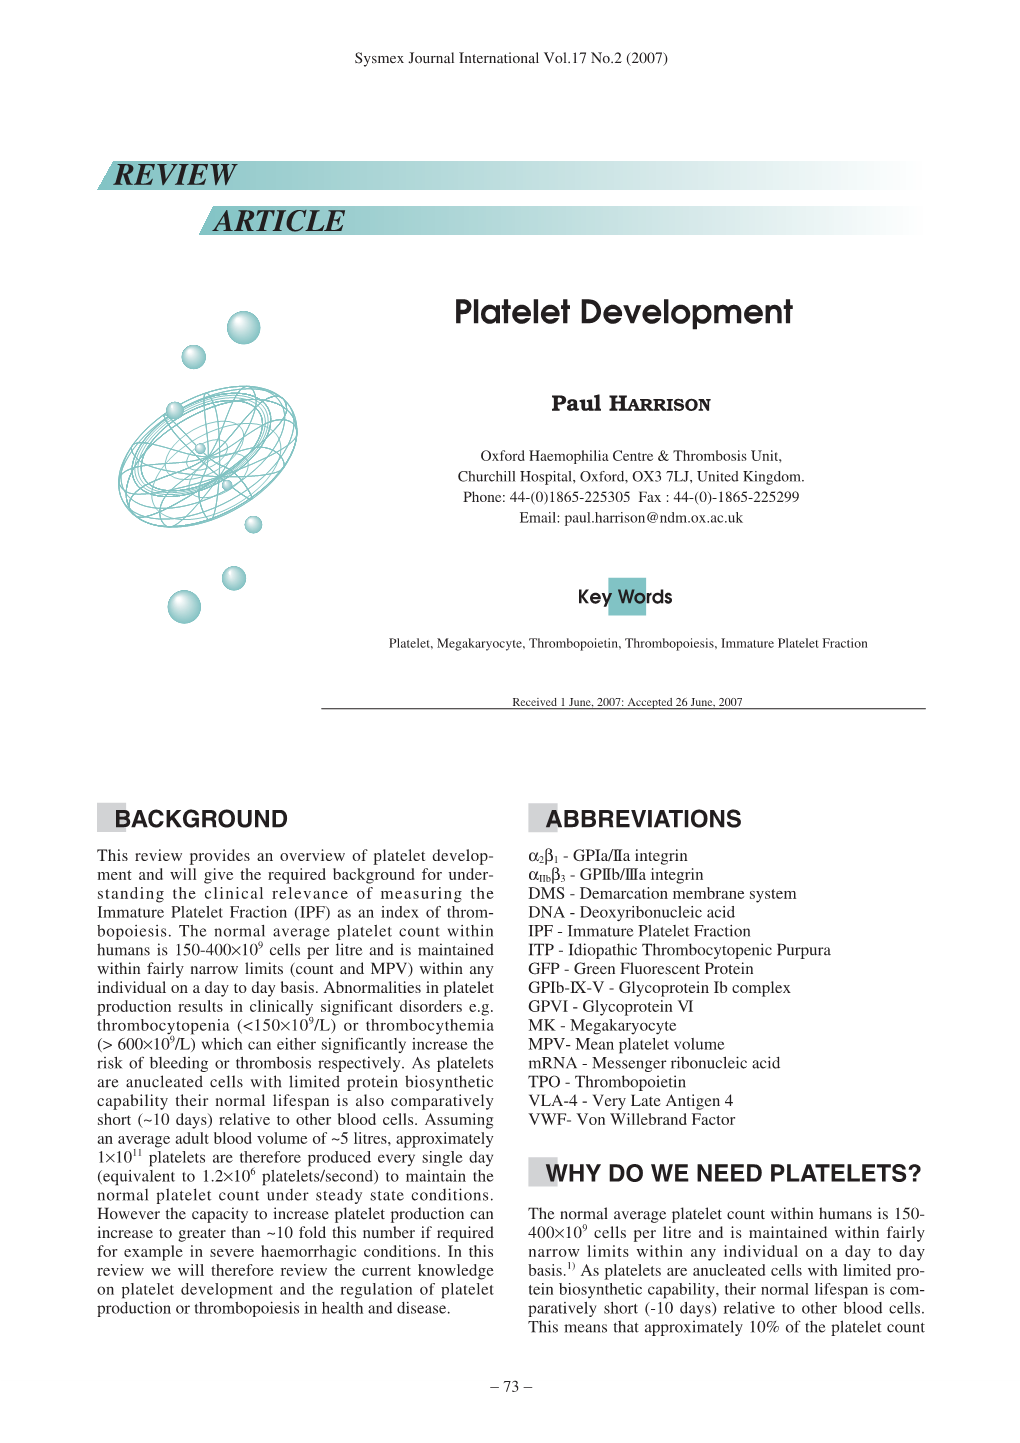 Platelet Development